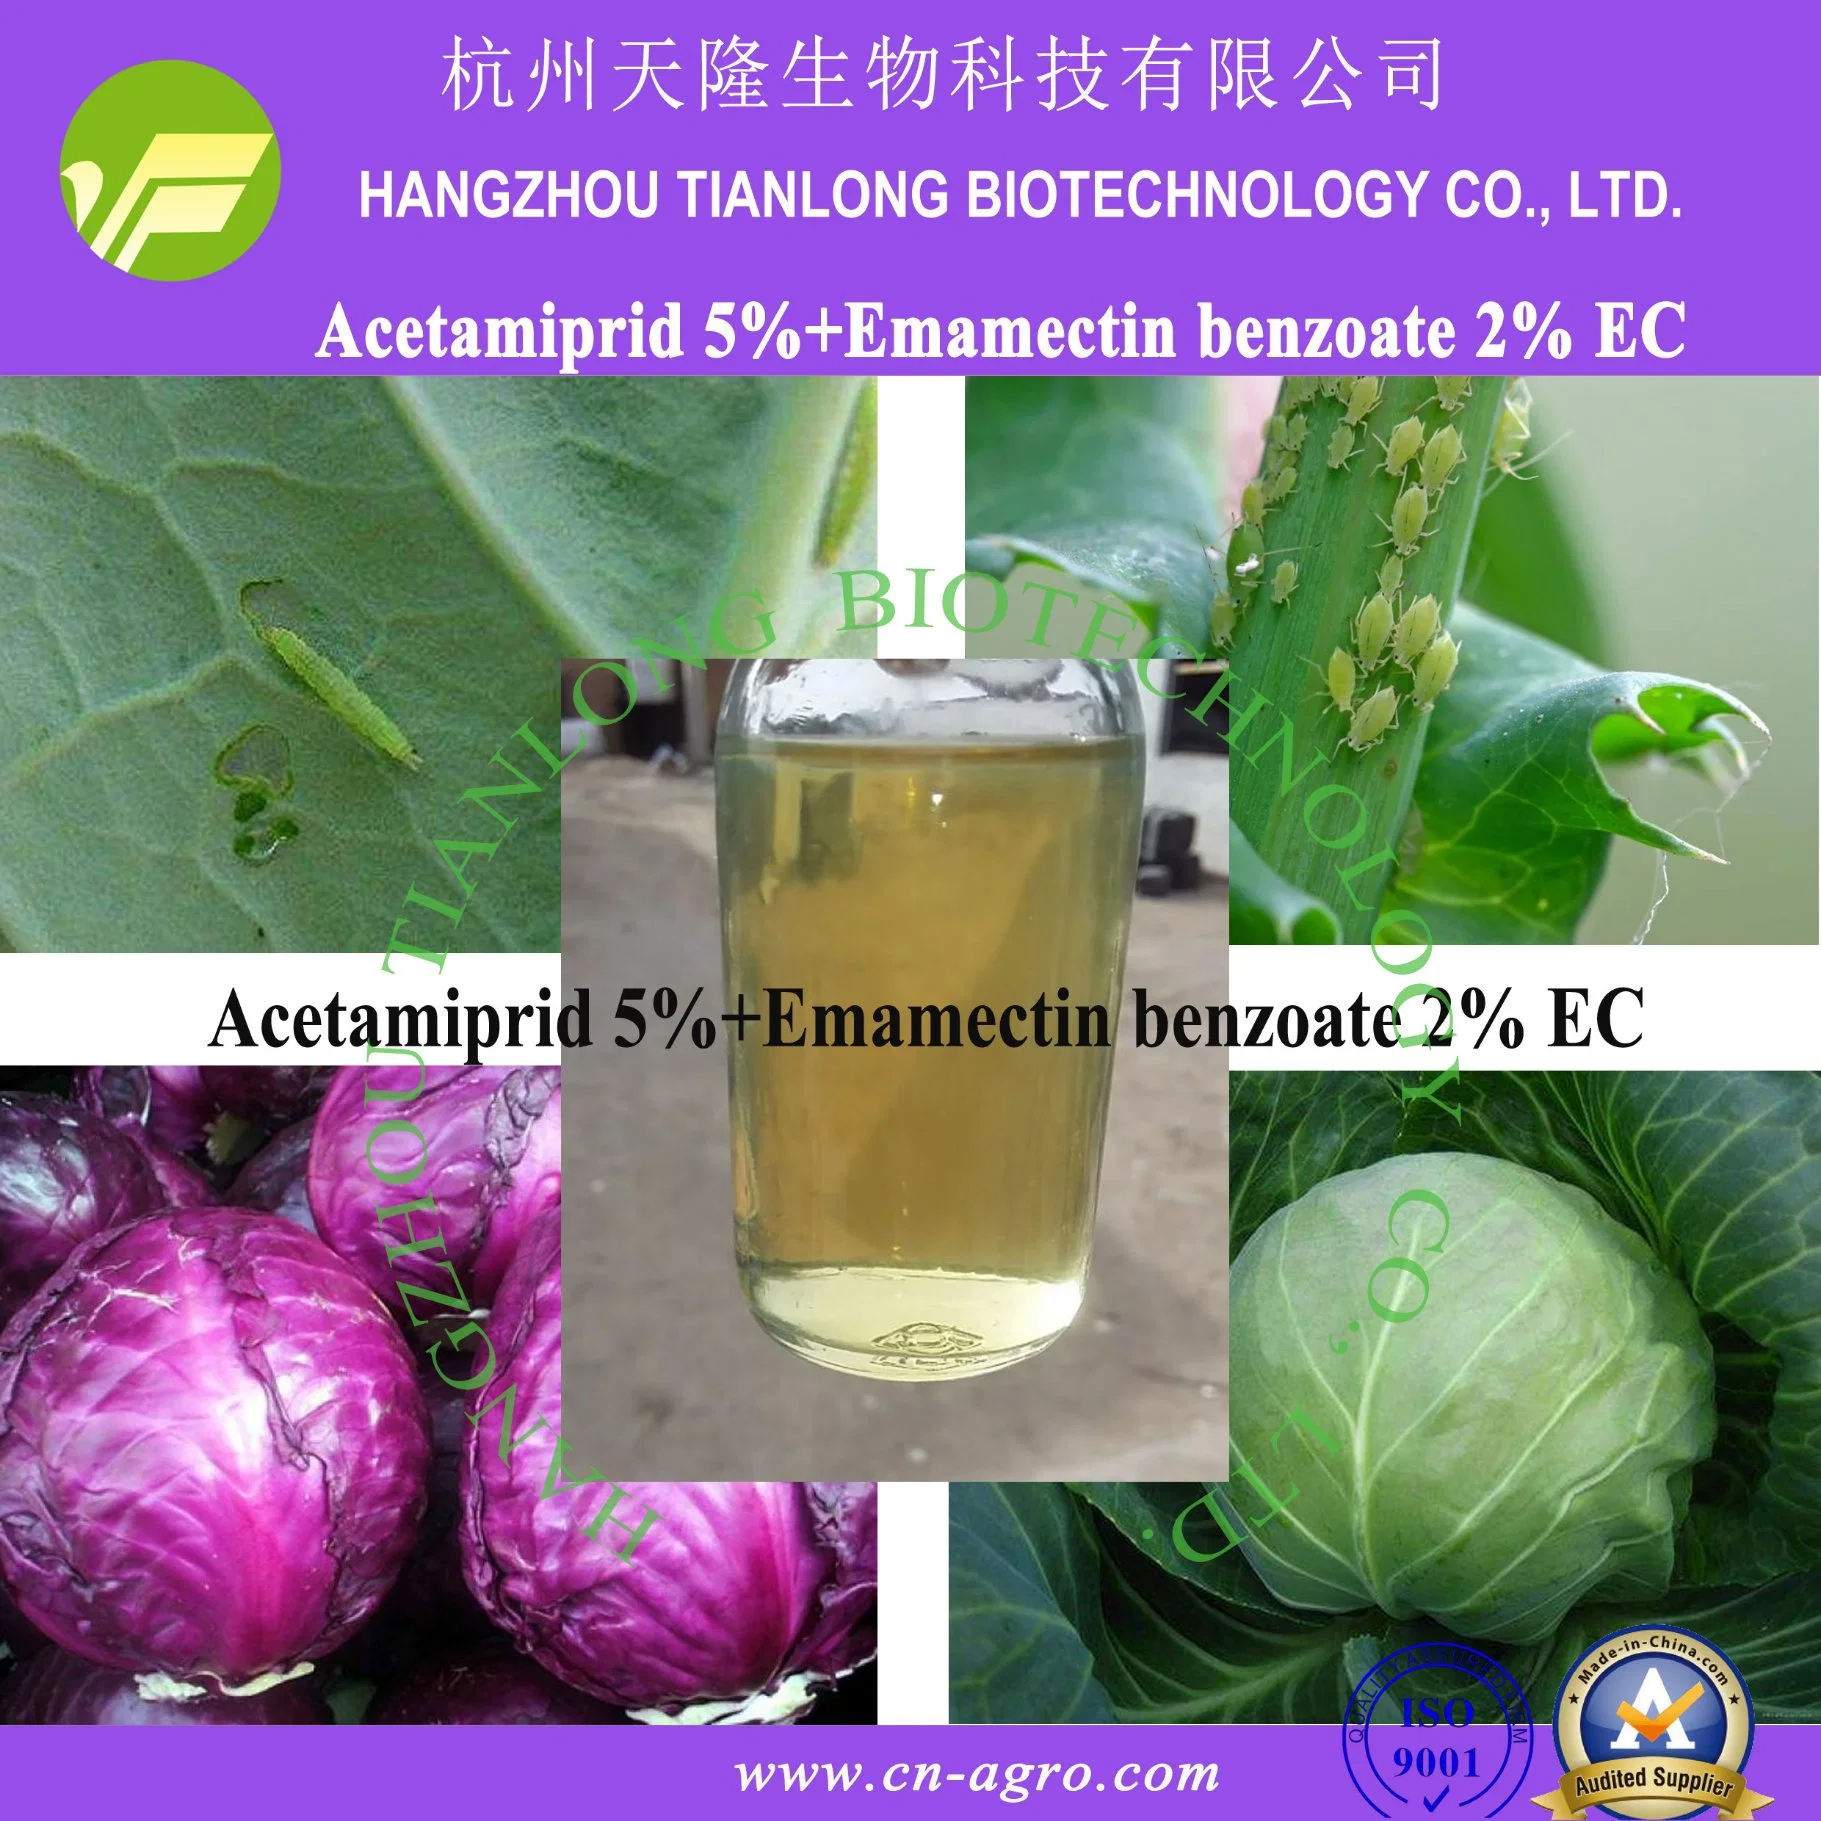 Acetamiprid 5%+Emamectin benzoate 2%EC-acetamiprid+emamectin benzoate (5%+2%) - смесь инсектицидов